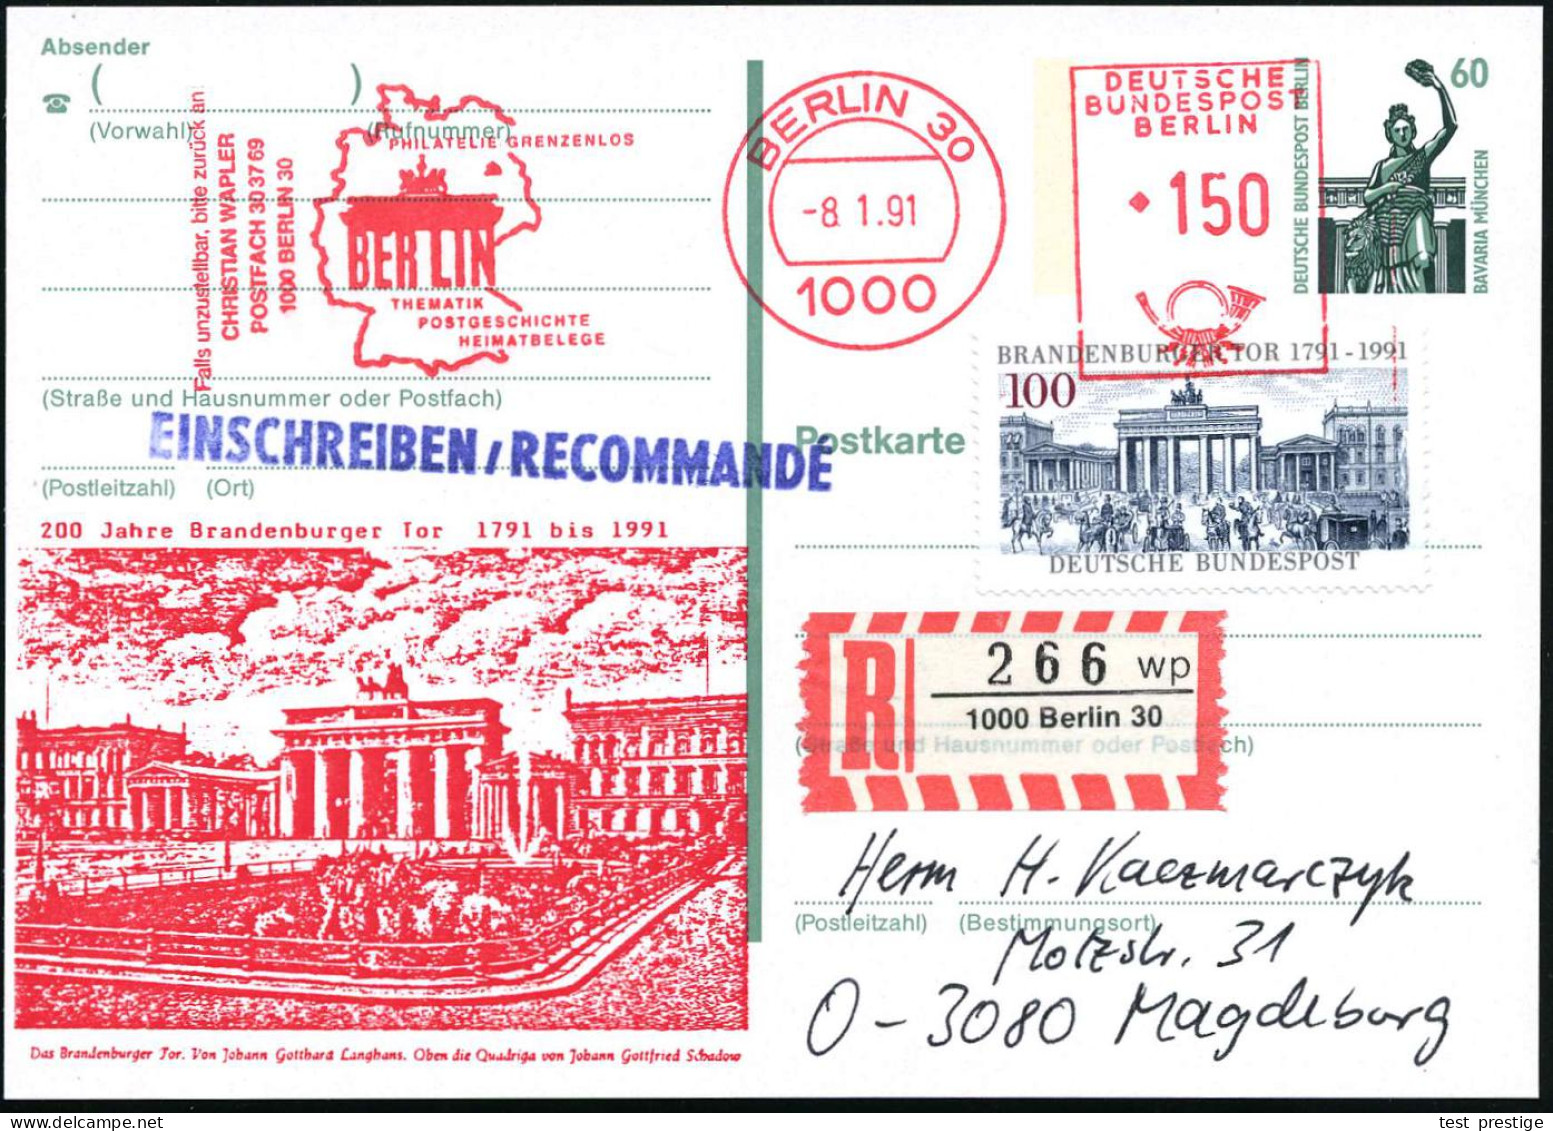 1000 BERLIN 30/ PHILATELIE GRENZENLOS... 1991 (10.8.) AFS Francotyp 150 Pf. = Brandenbg.Tor Als VE Auf Amtl. P 60 Pf. Ba - Monuments